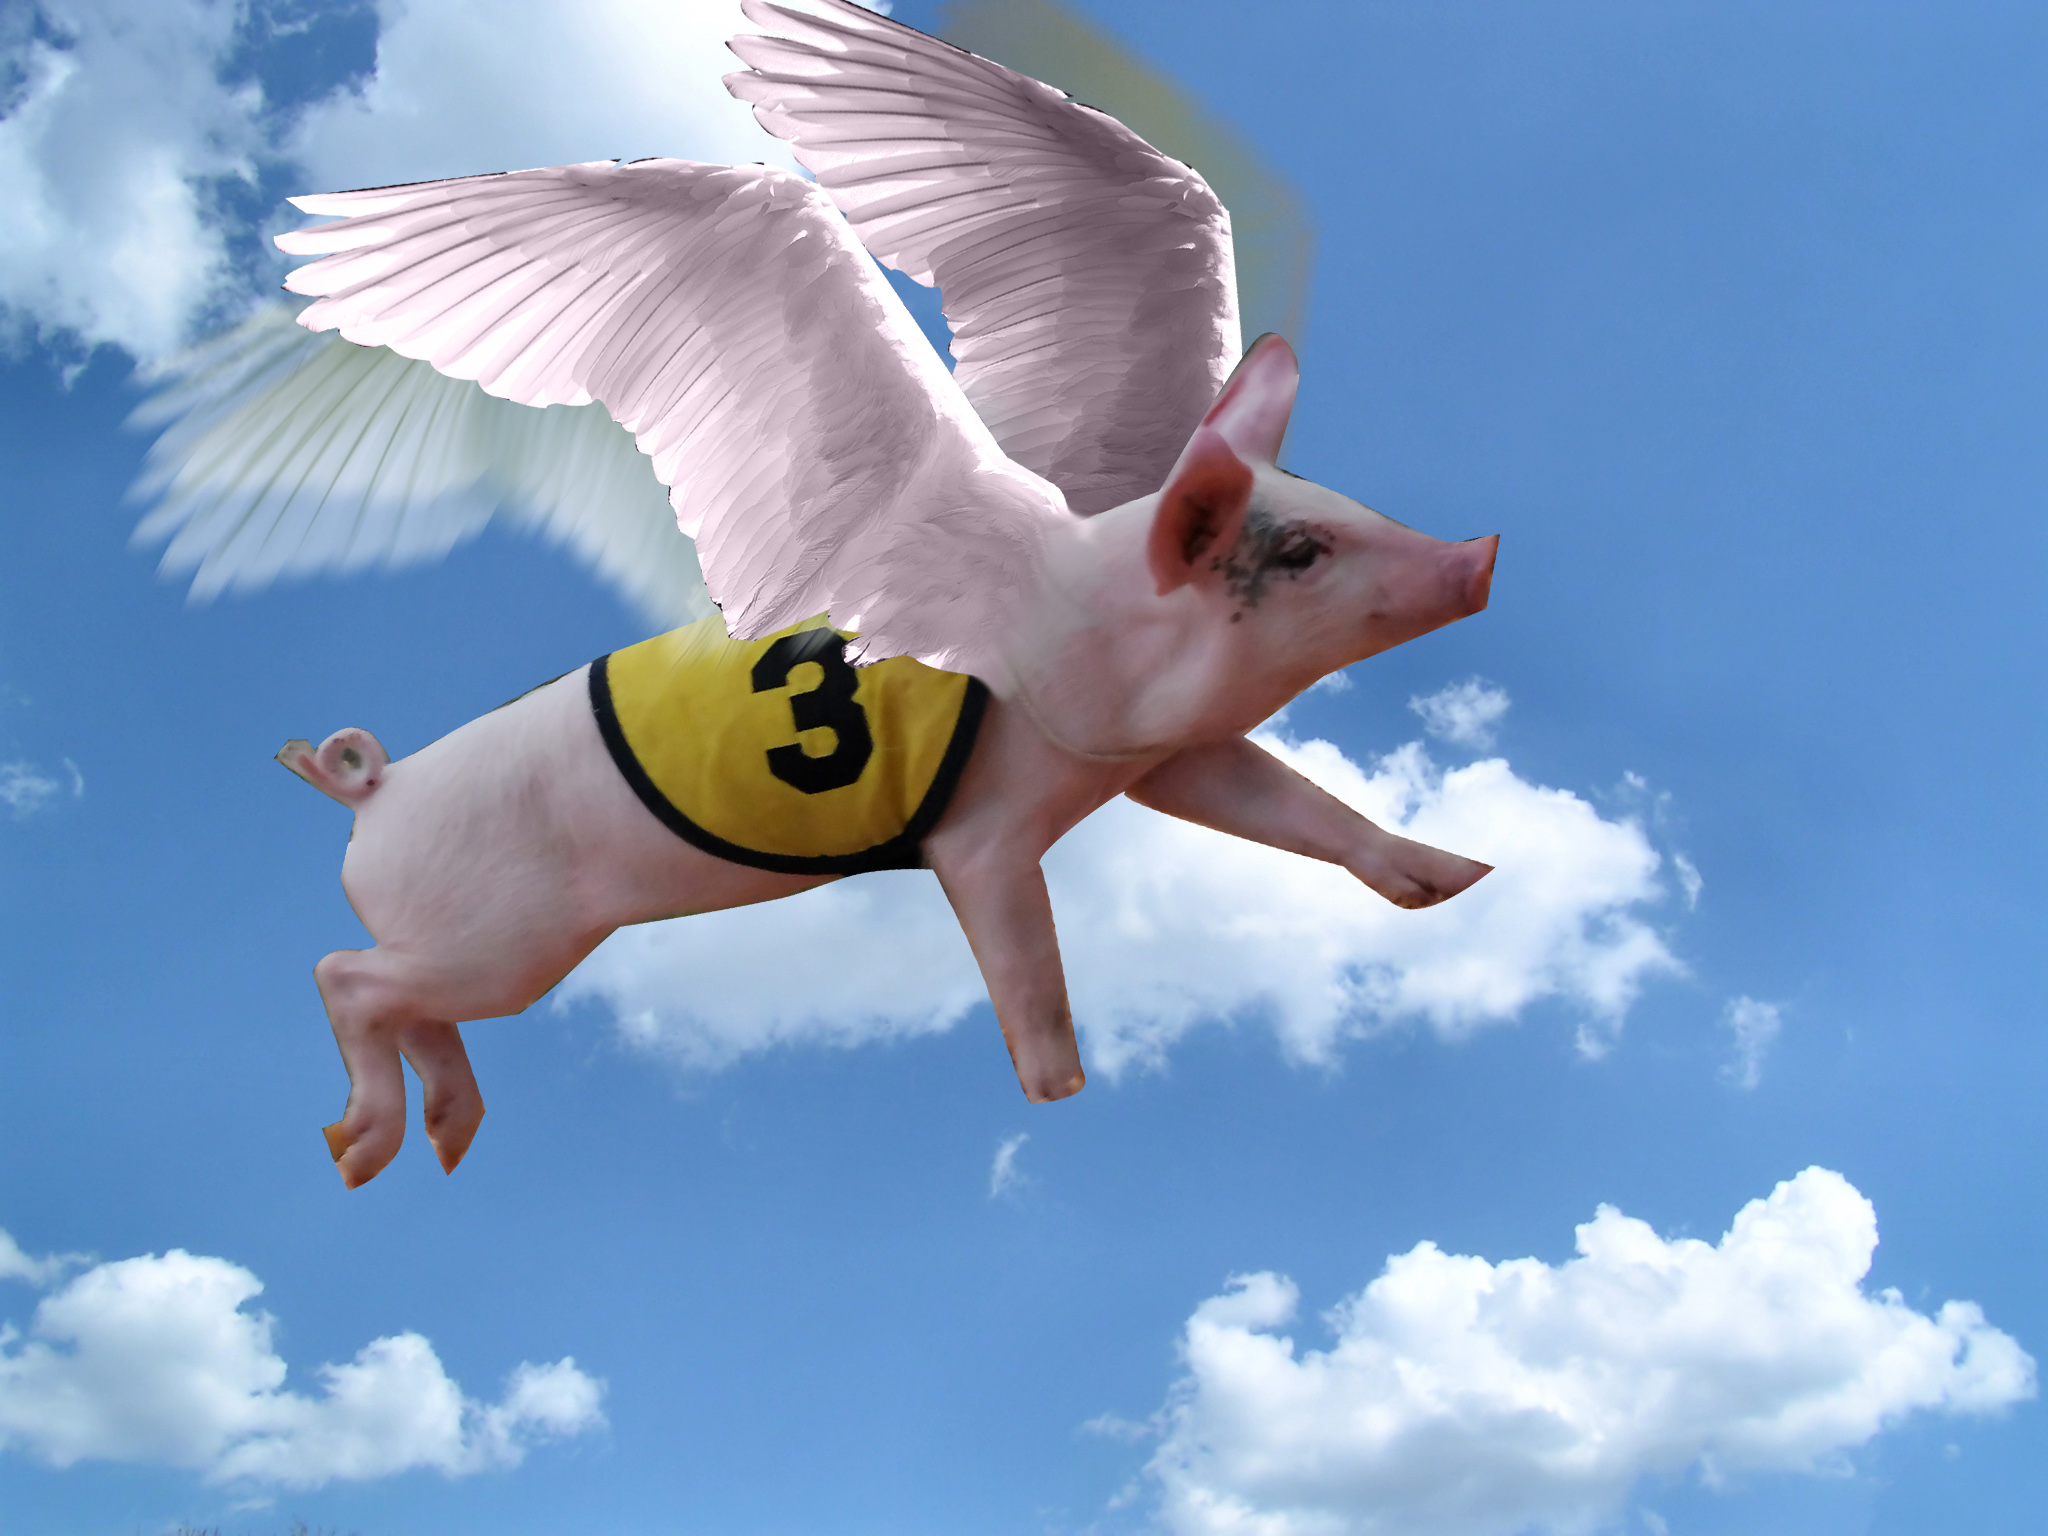 Flying Pig.